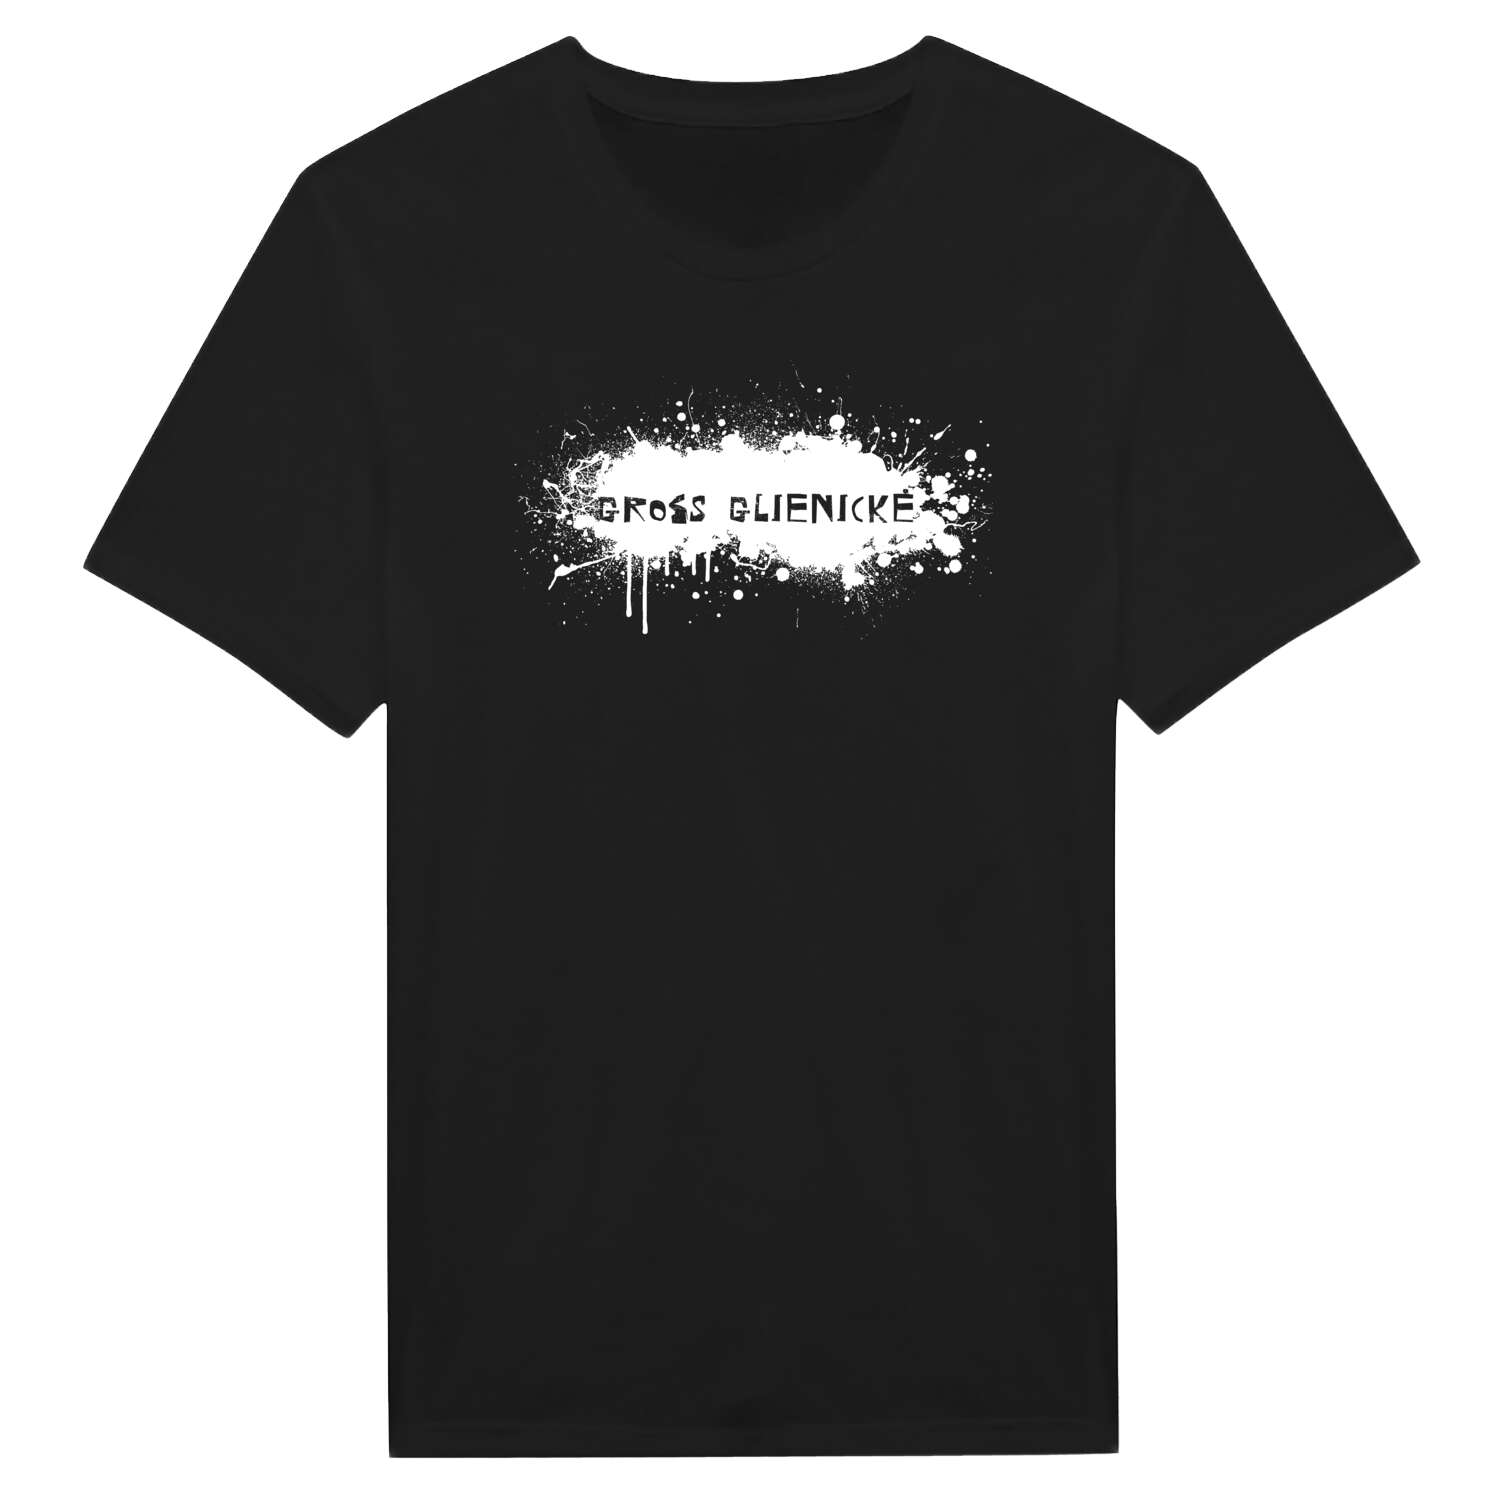 Groß Glienicke T-Shirt »Paint Splash Punk«